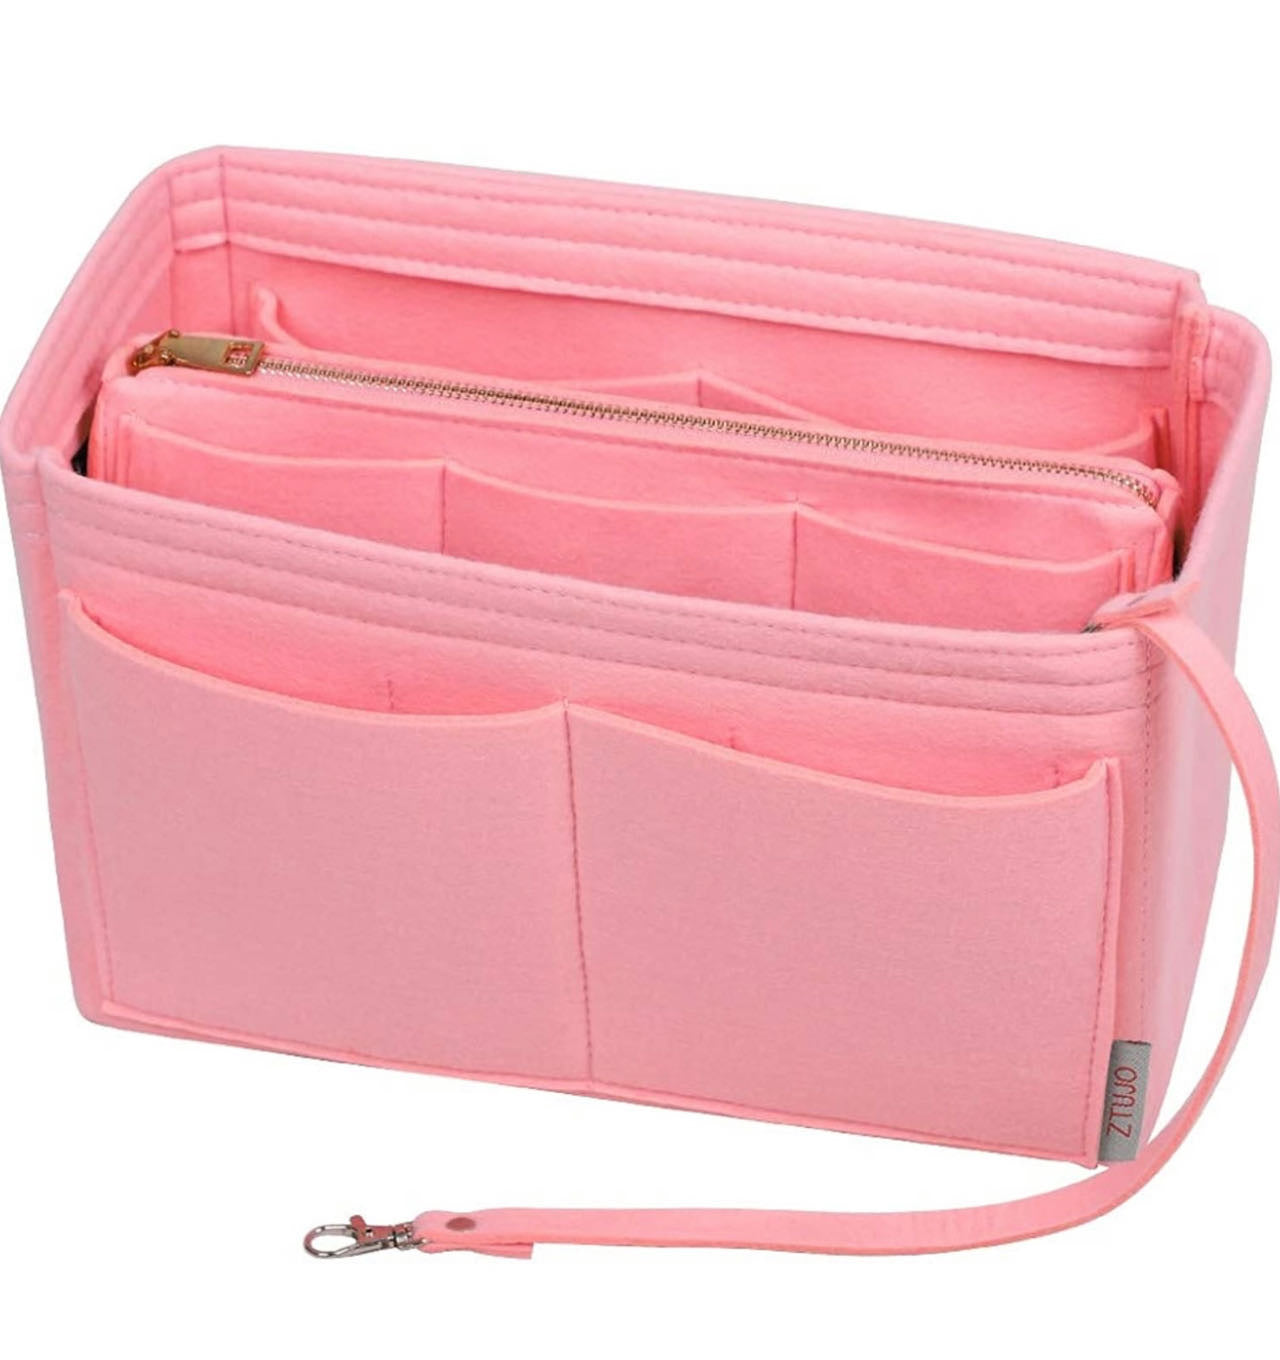 Purse Organizer Insert, with zipper, Handbag & Tote Shaper,Pink